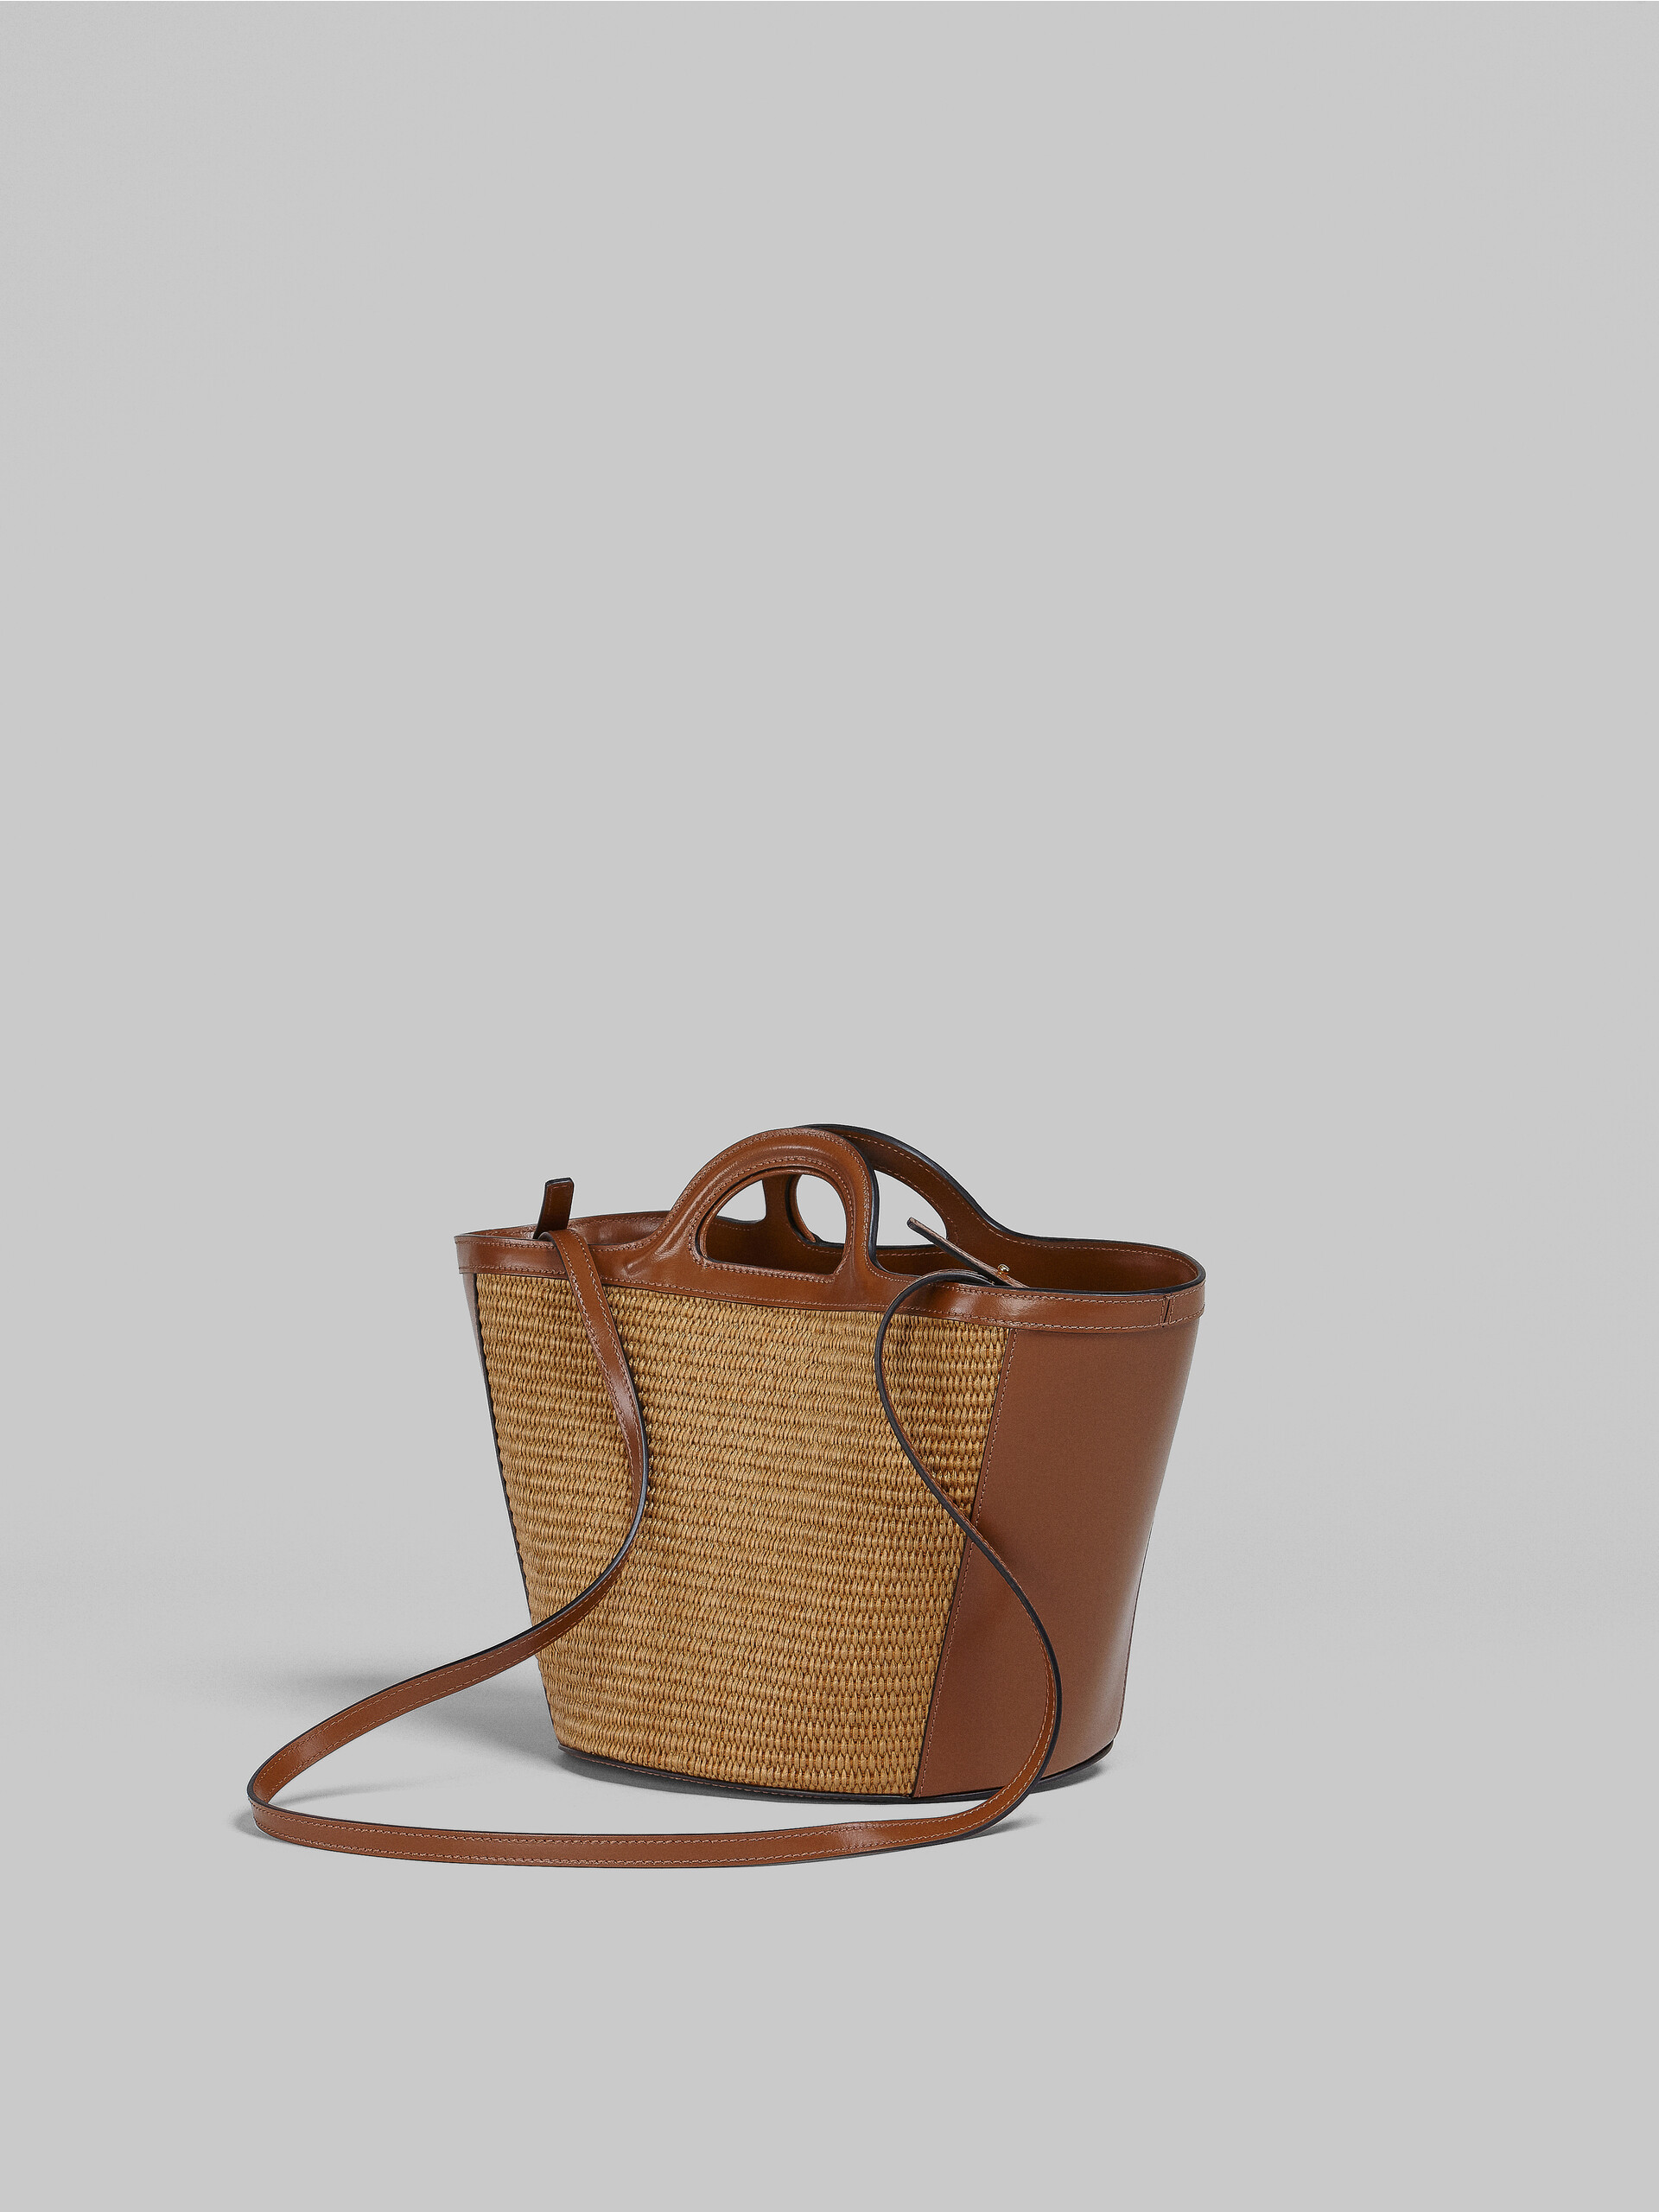 TROPICALIA small bag in brown leather and raffia - Handbag - Image 3